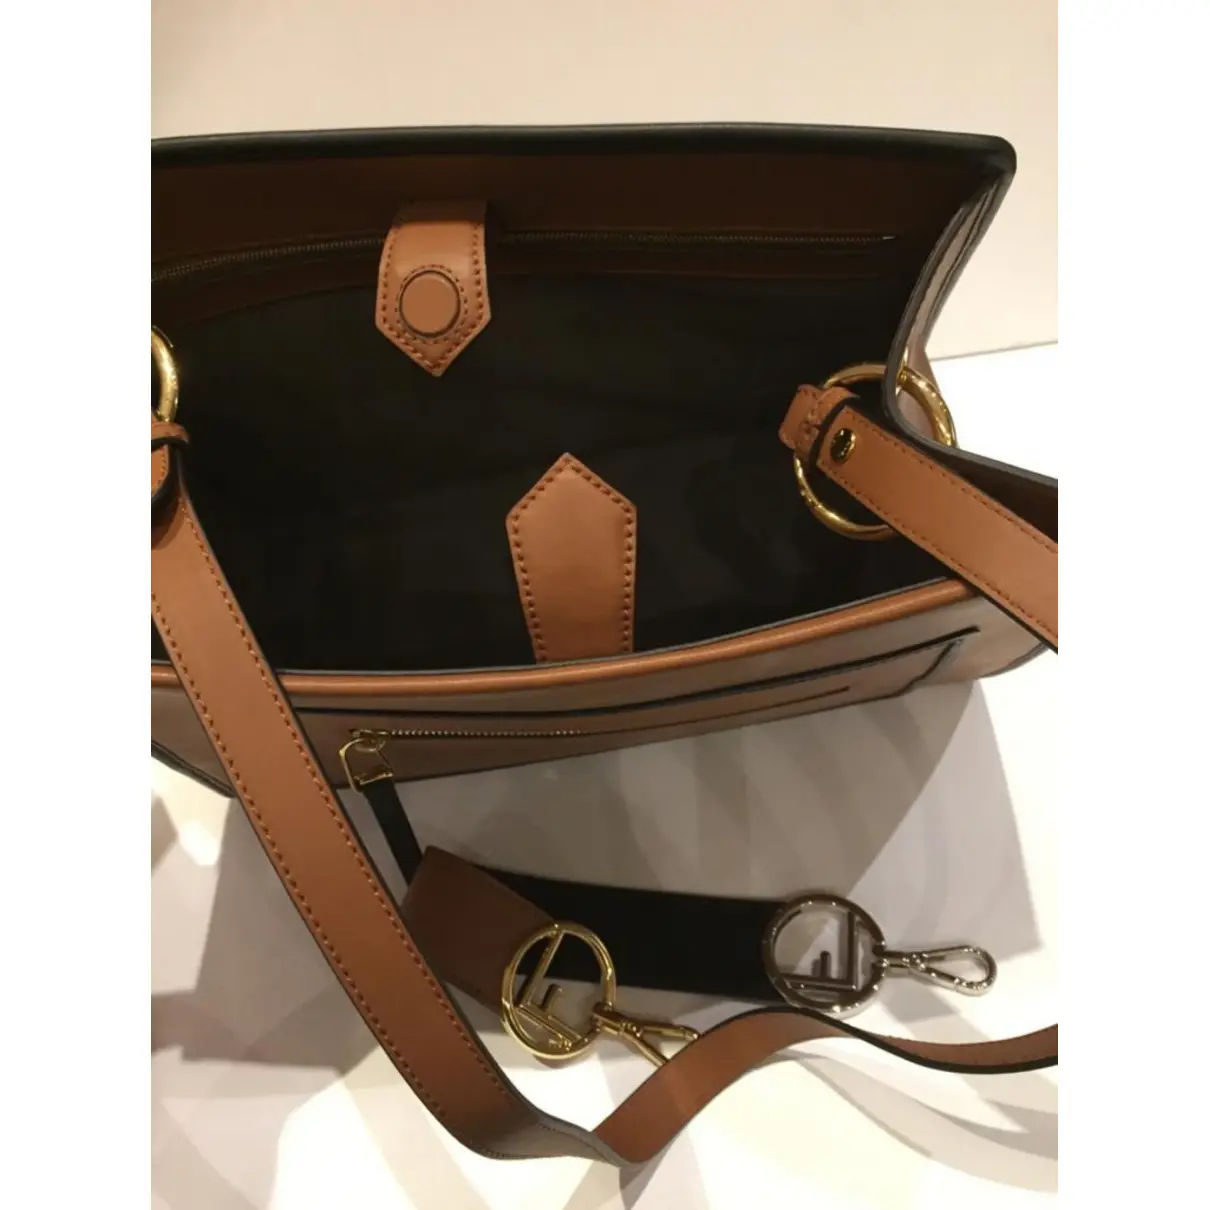 Runaway leather handbag Fendi